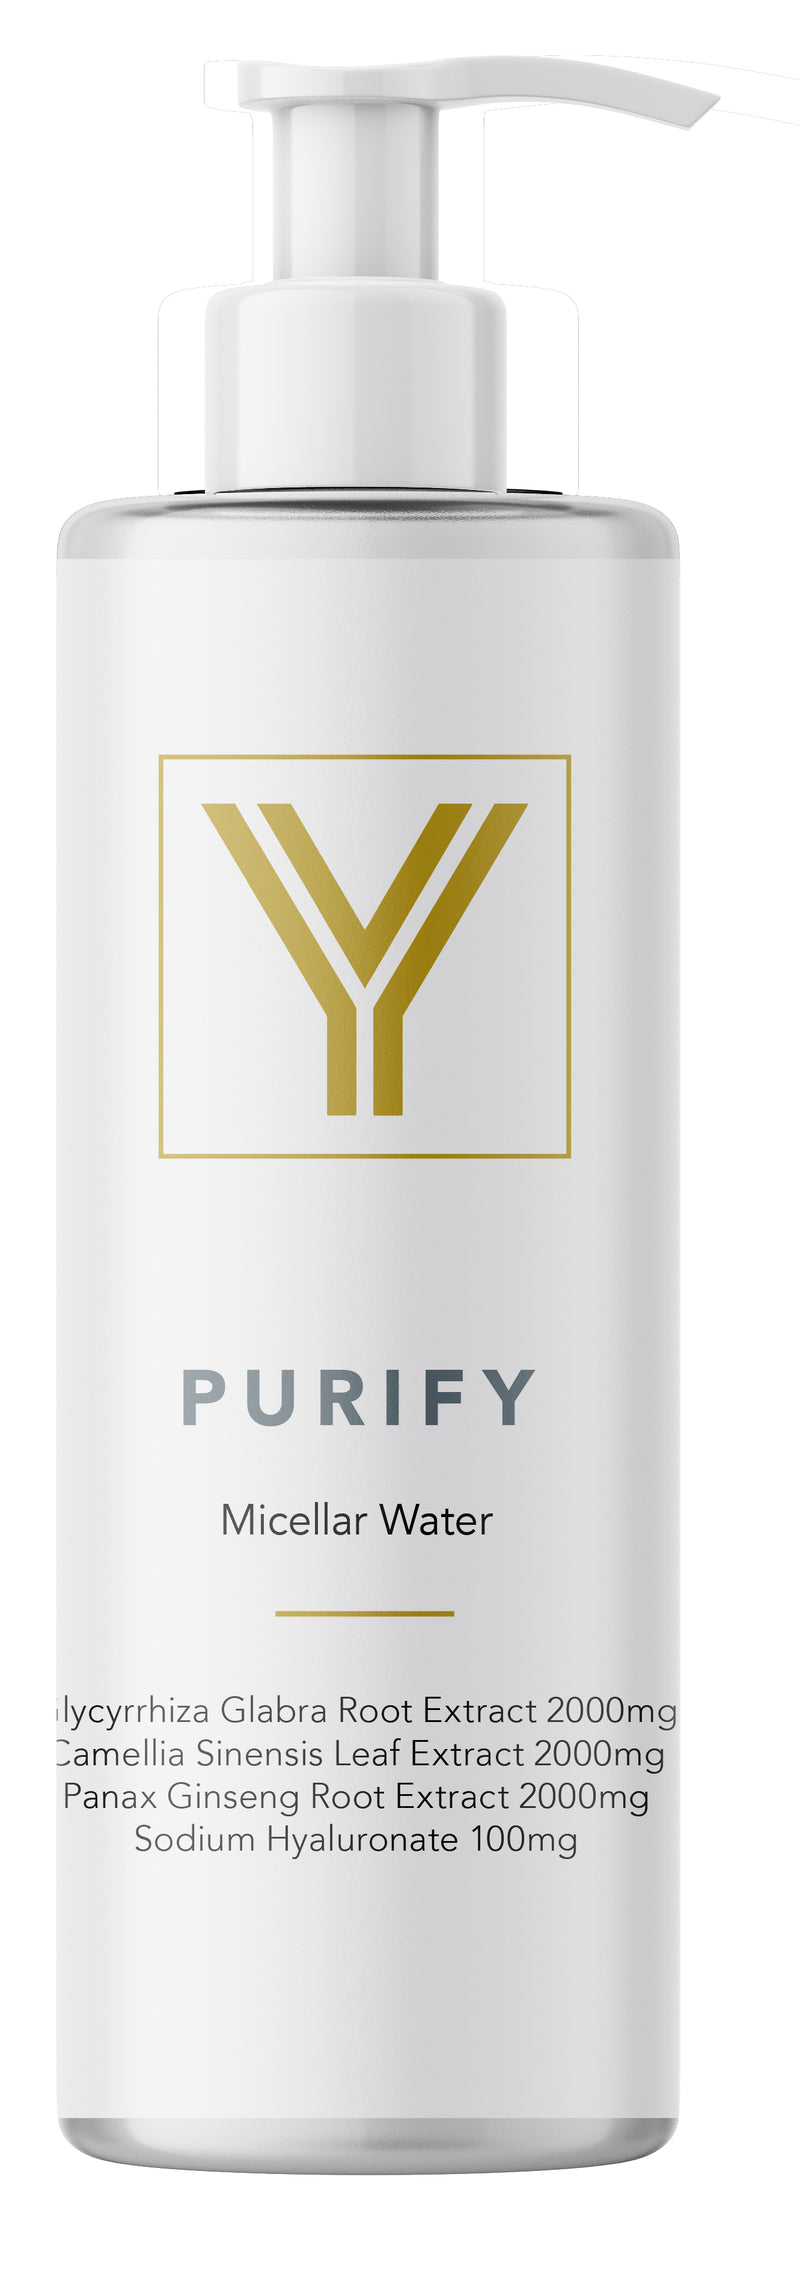 Y Skincare Purity Micellar Water 500ml